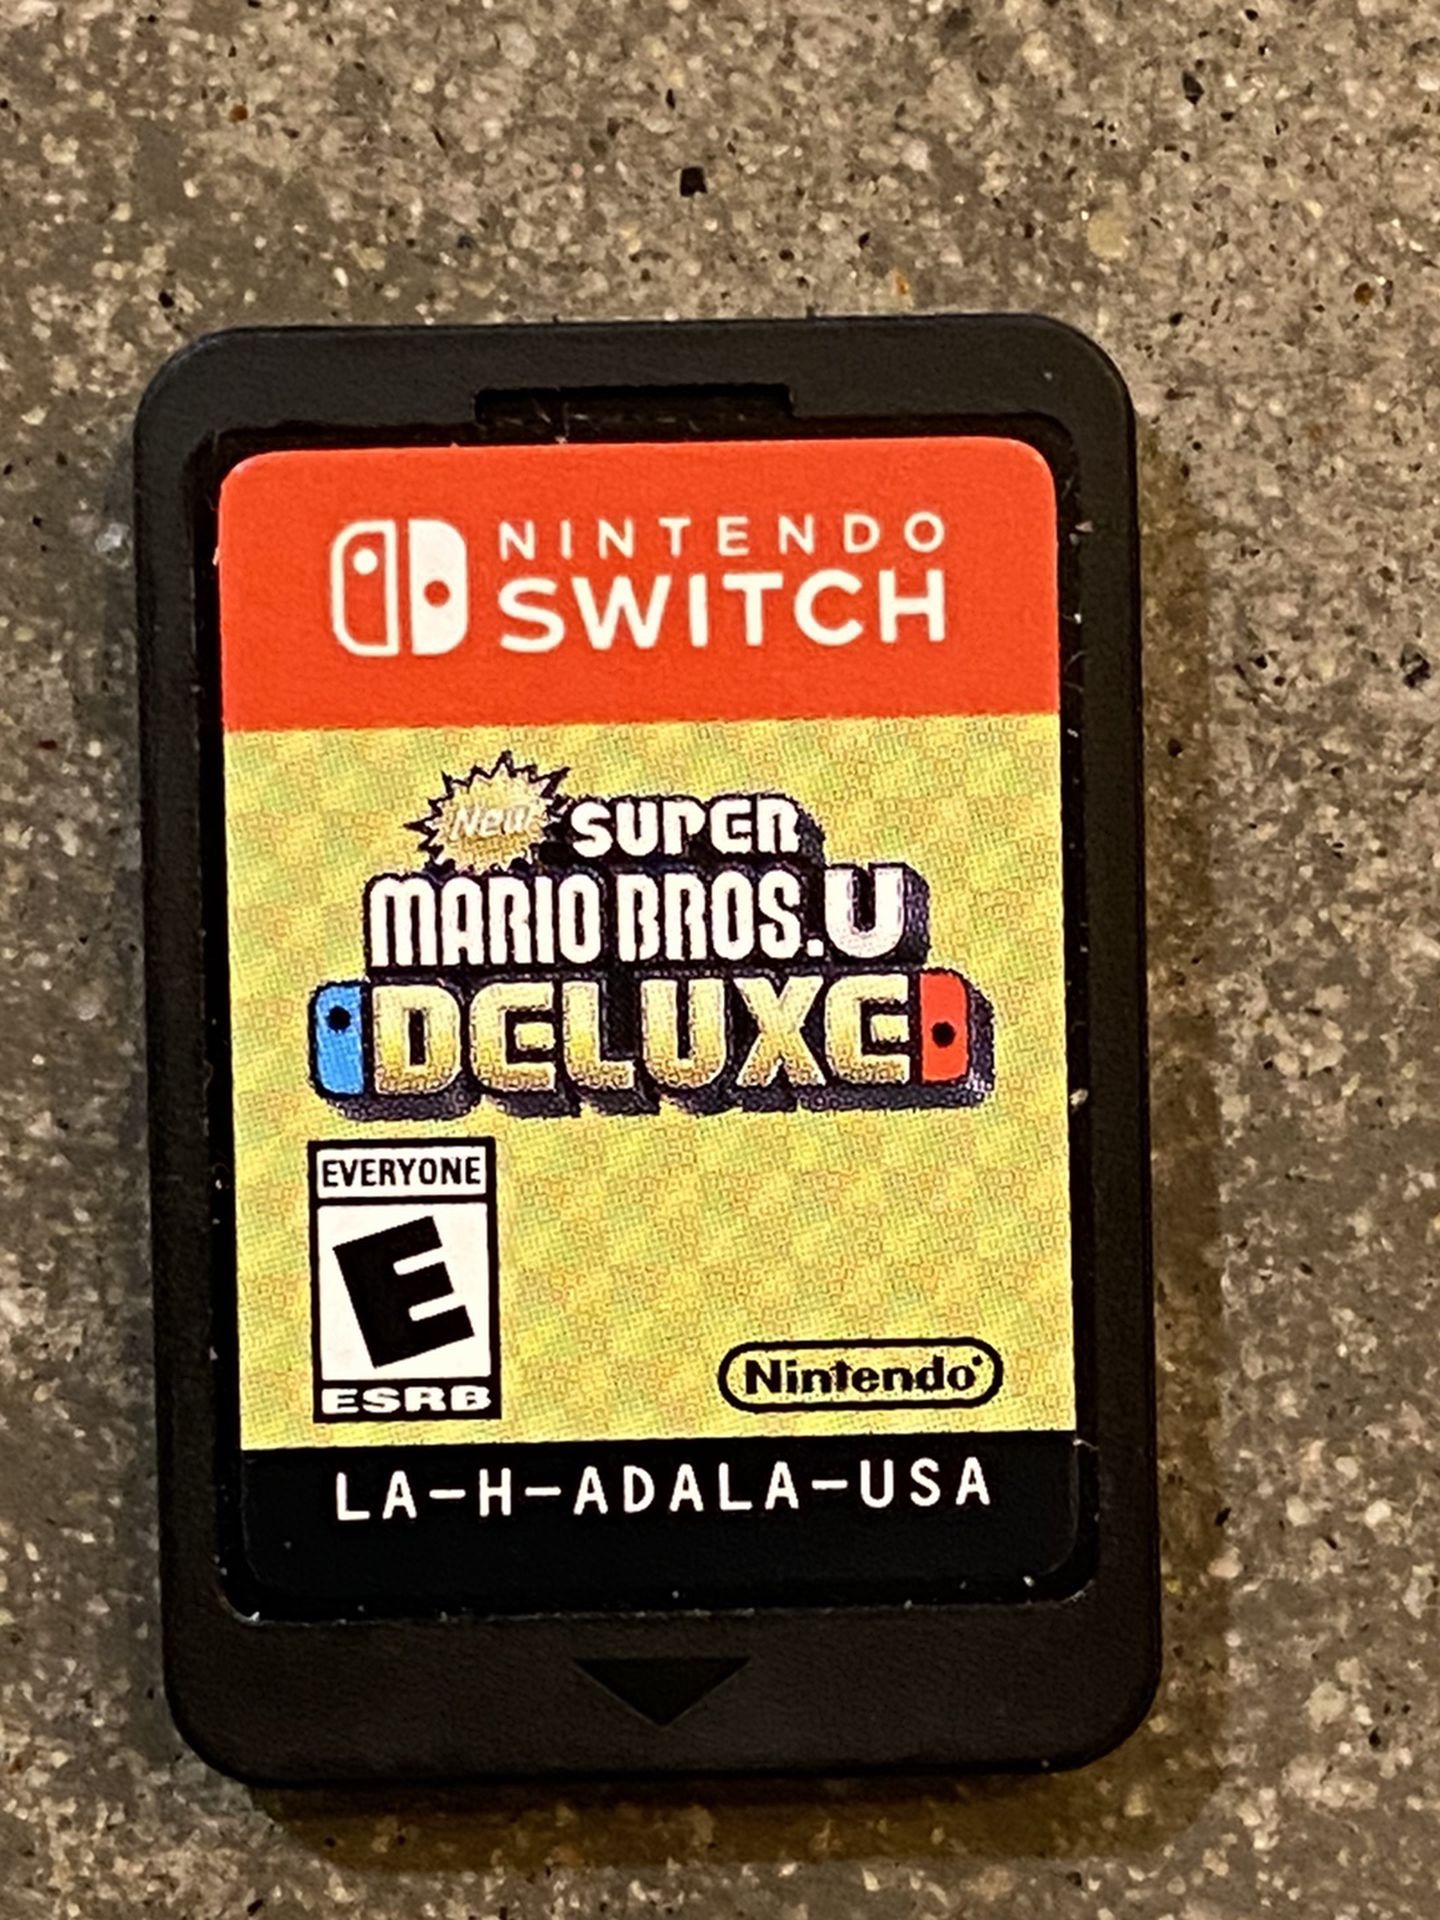 Nintendo Switch Super Mario Bros U Deluxe